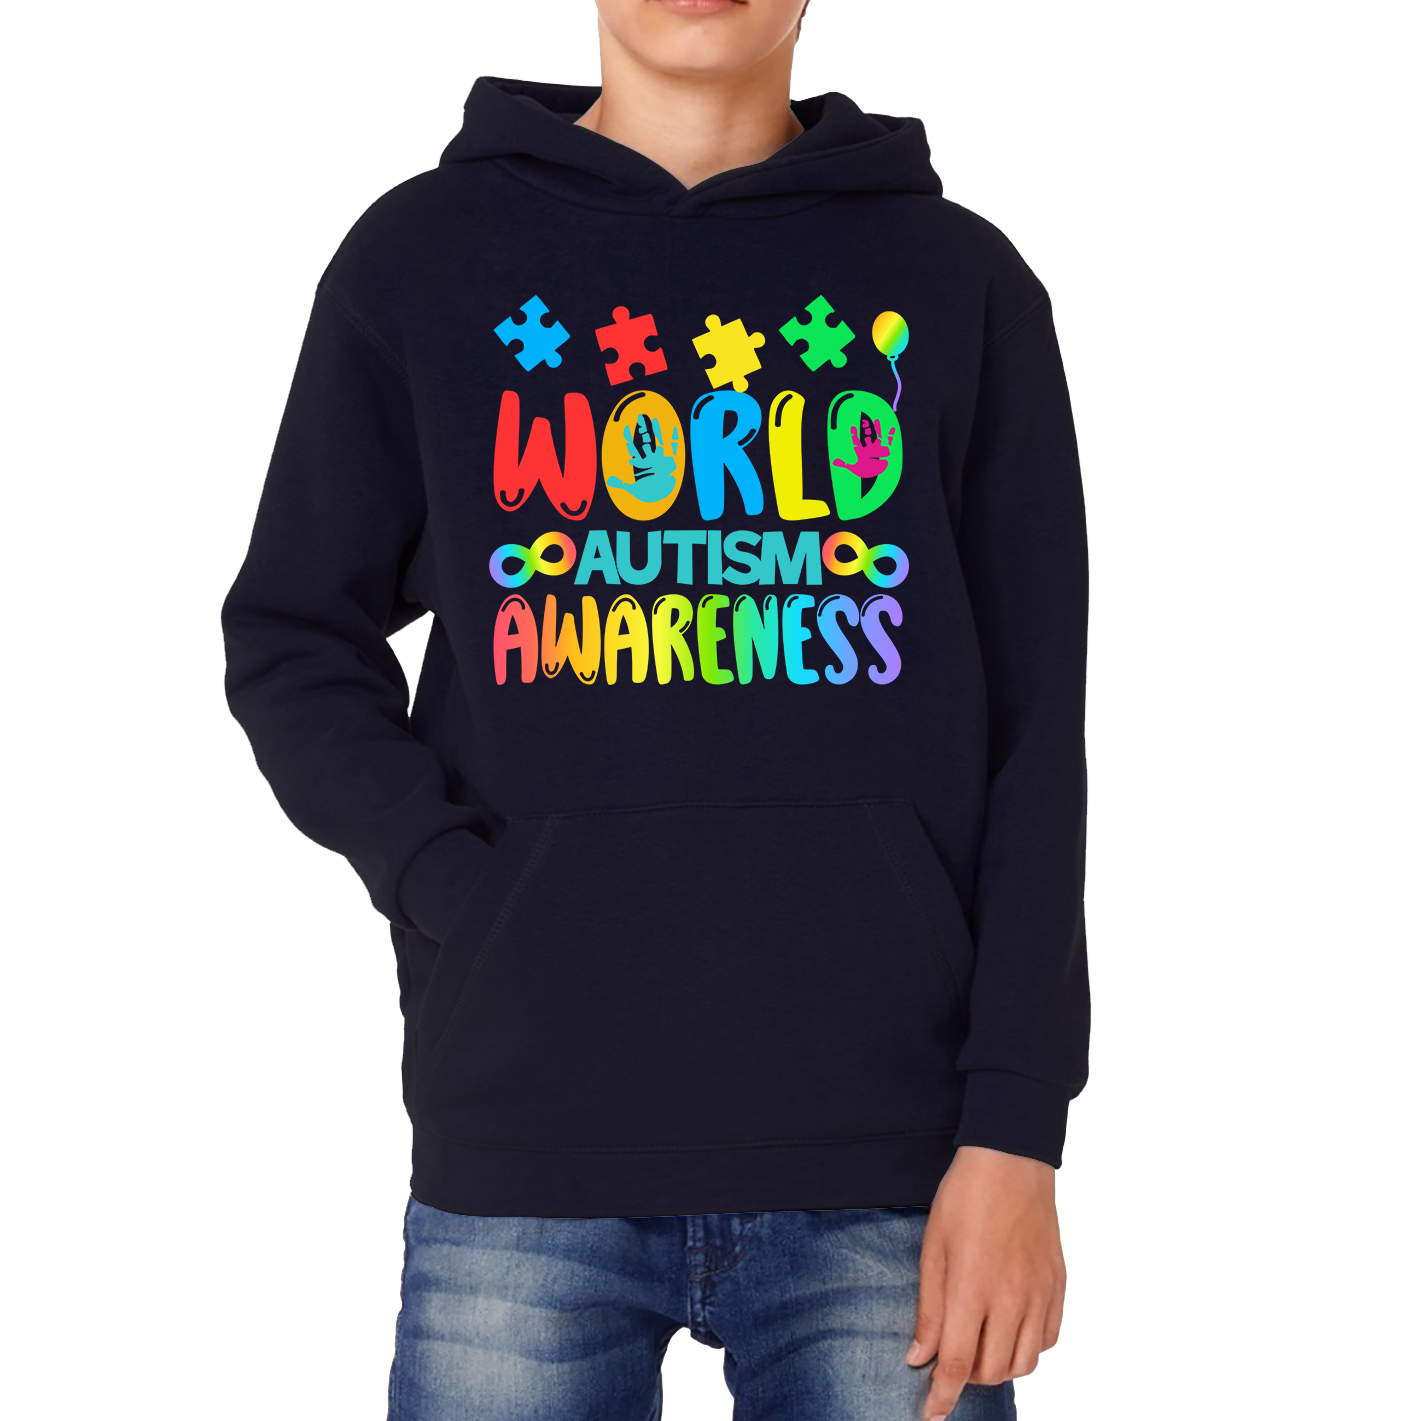 World Autism Awareness Day Kids Hoodie